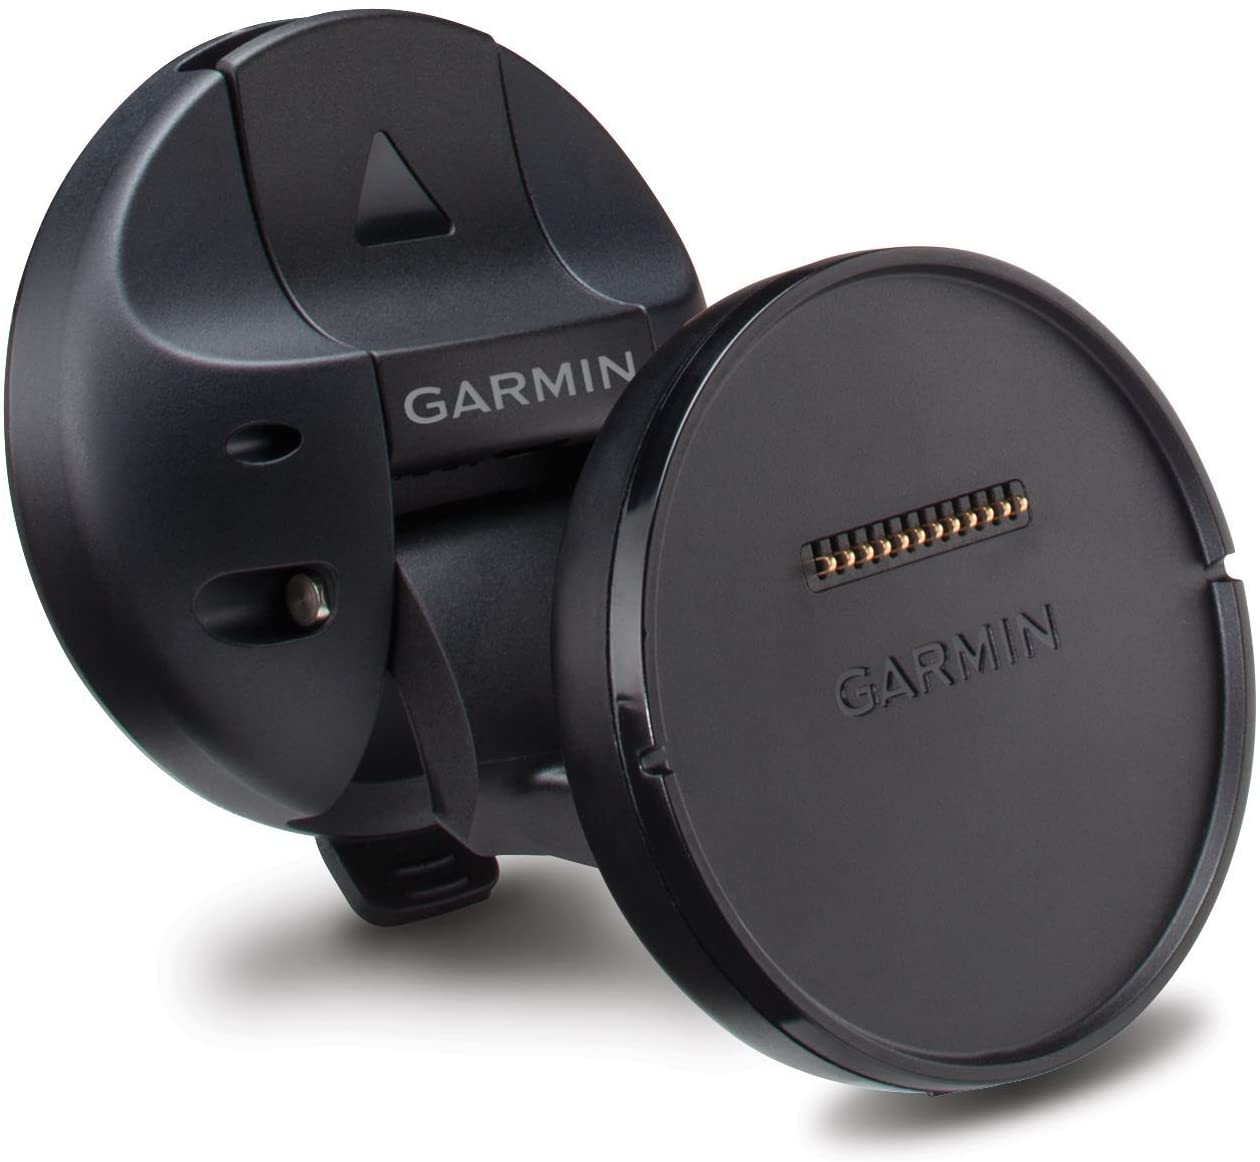 Garmin Support, Garmin Dash Cam™ Universal Suction Cup Mount